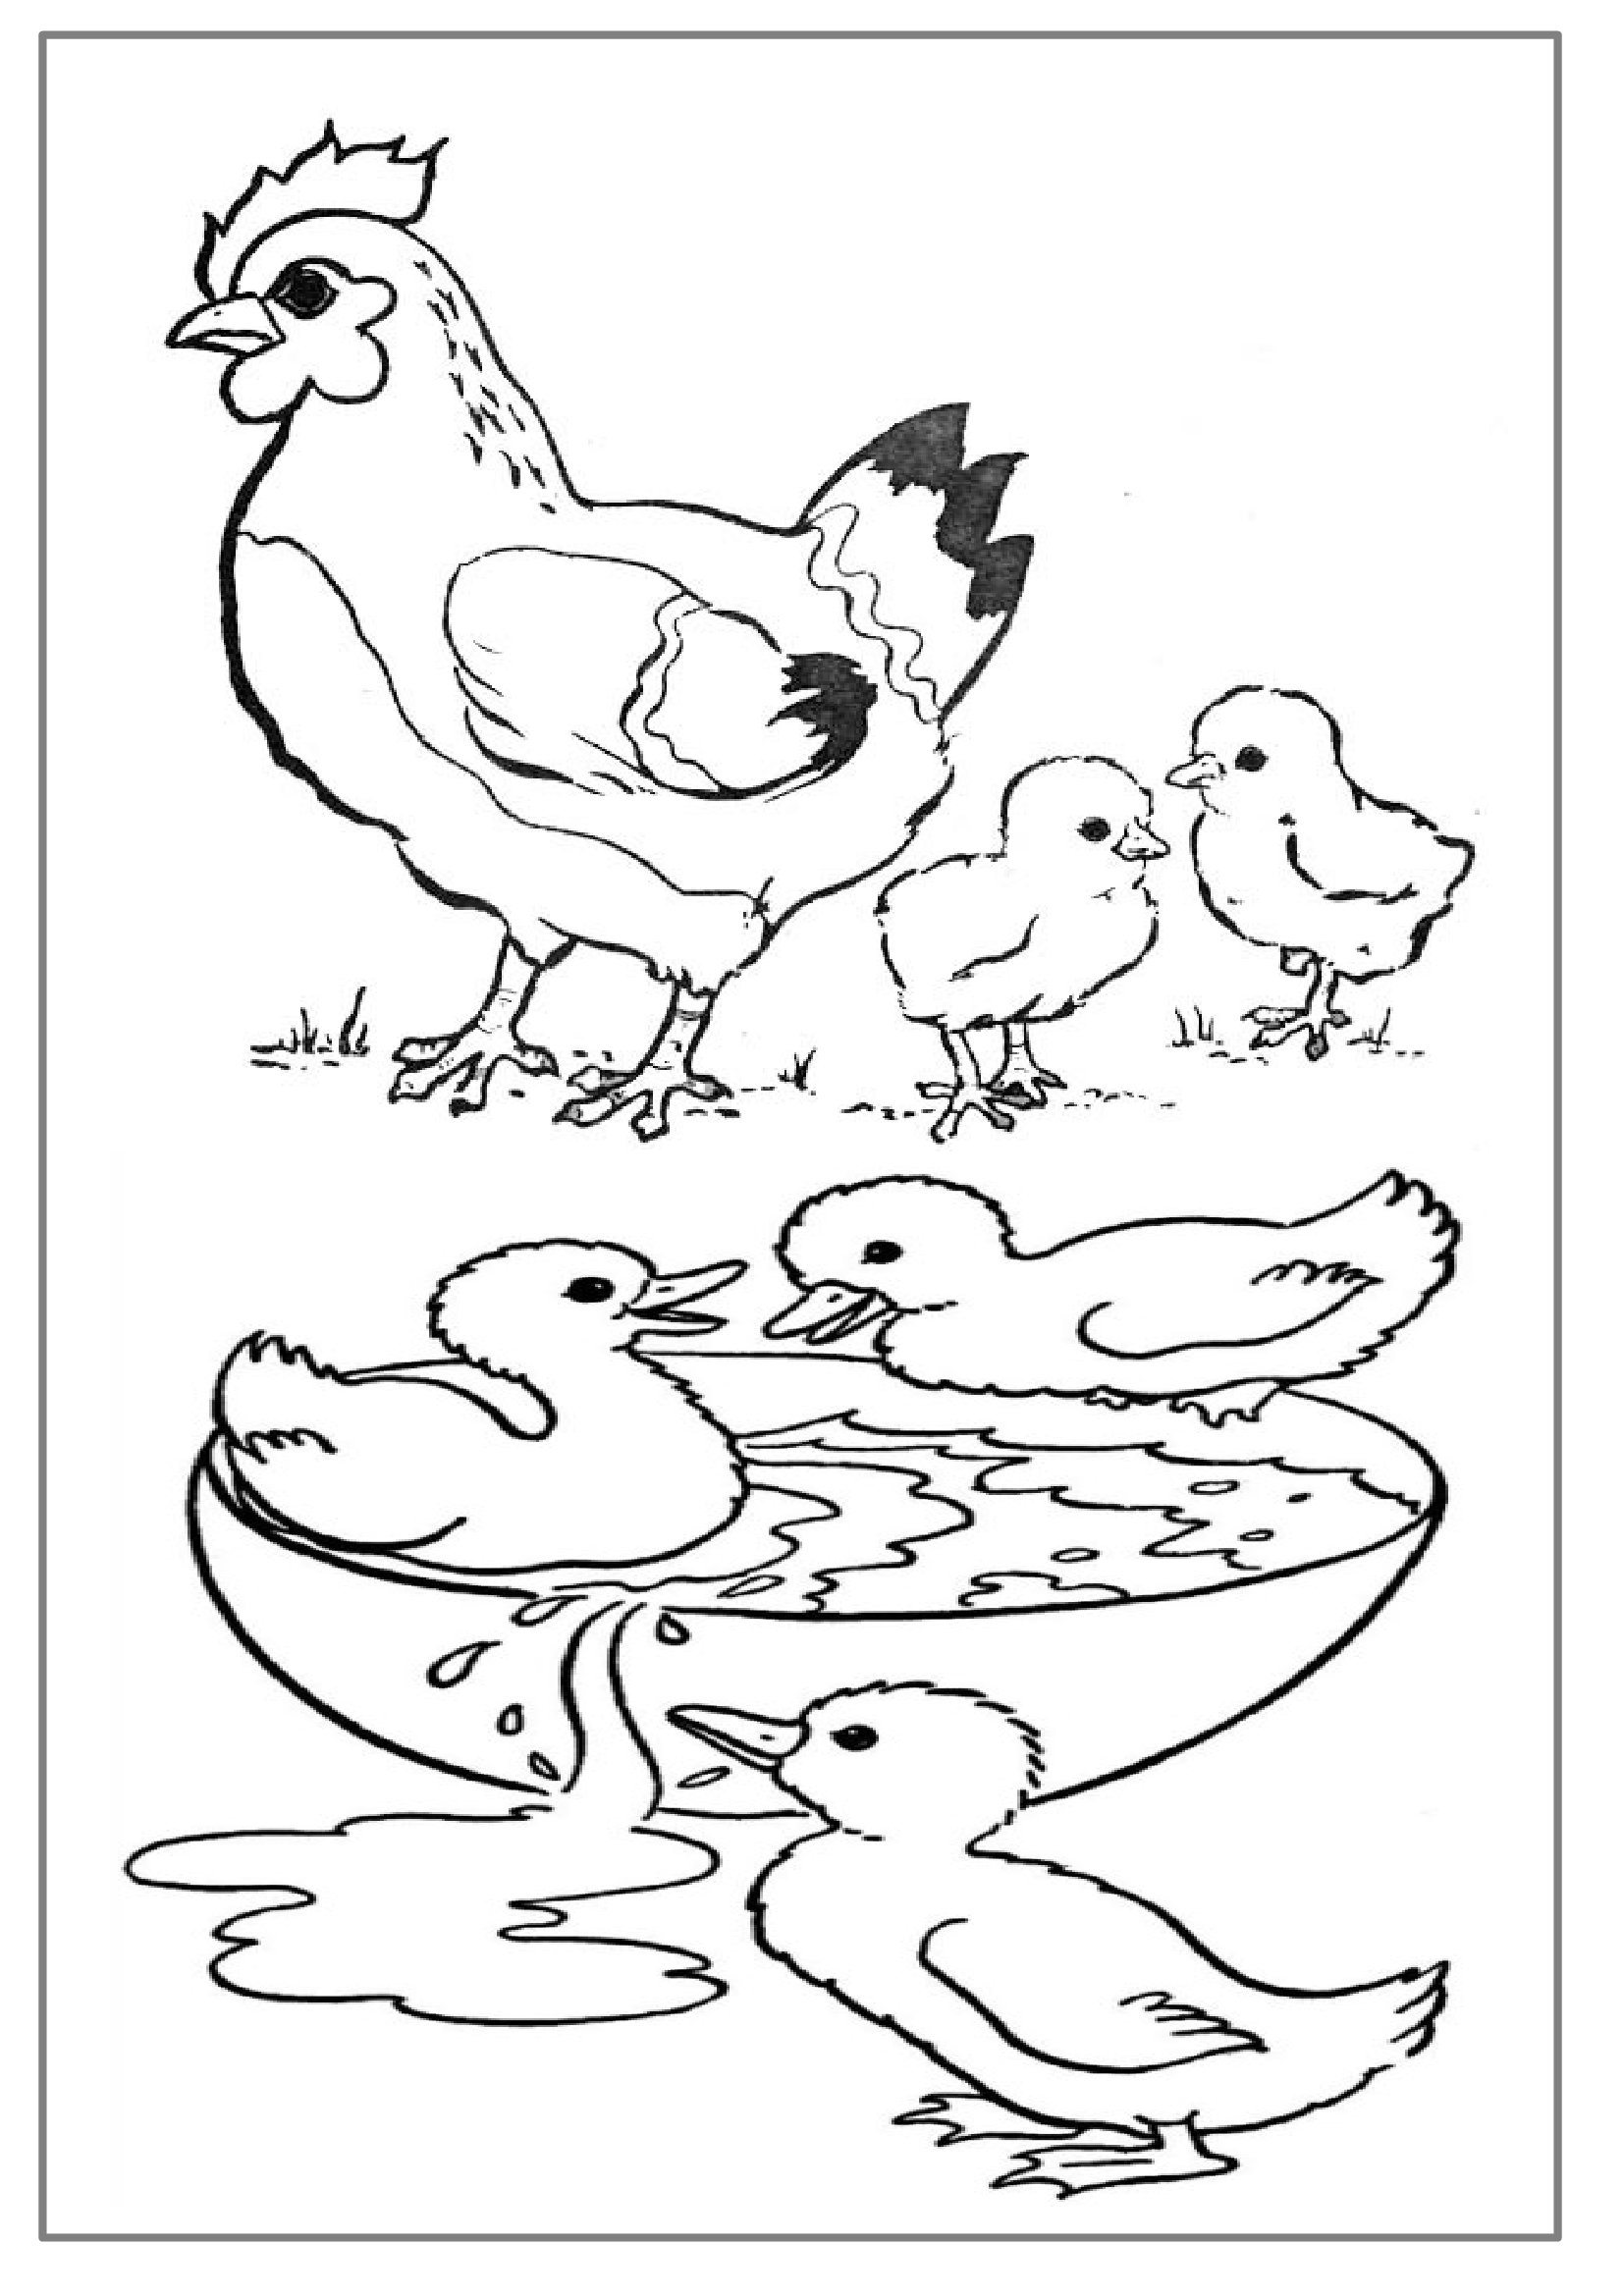 Dibujo para colorear: Animales de granja (Animales) #21440 - Dibujos para colorear